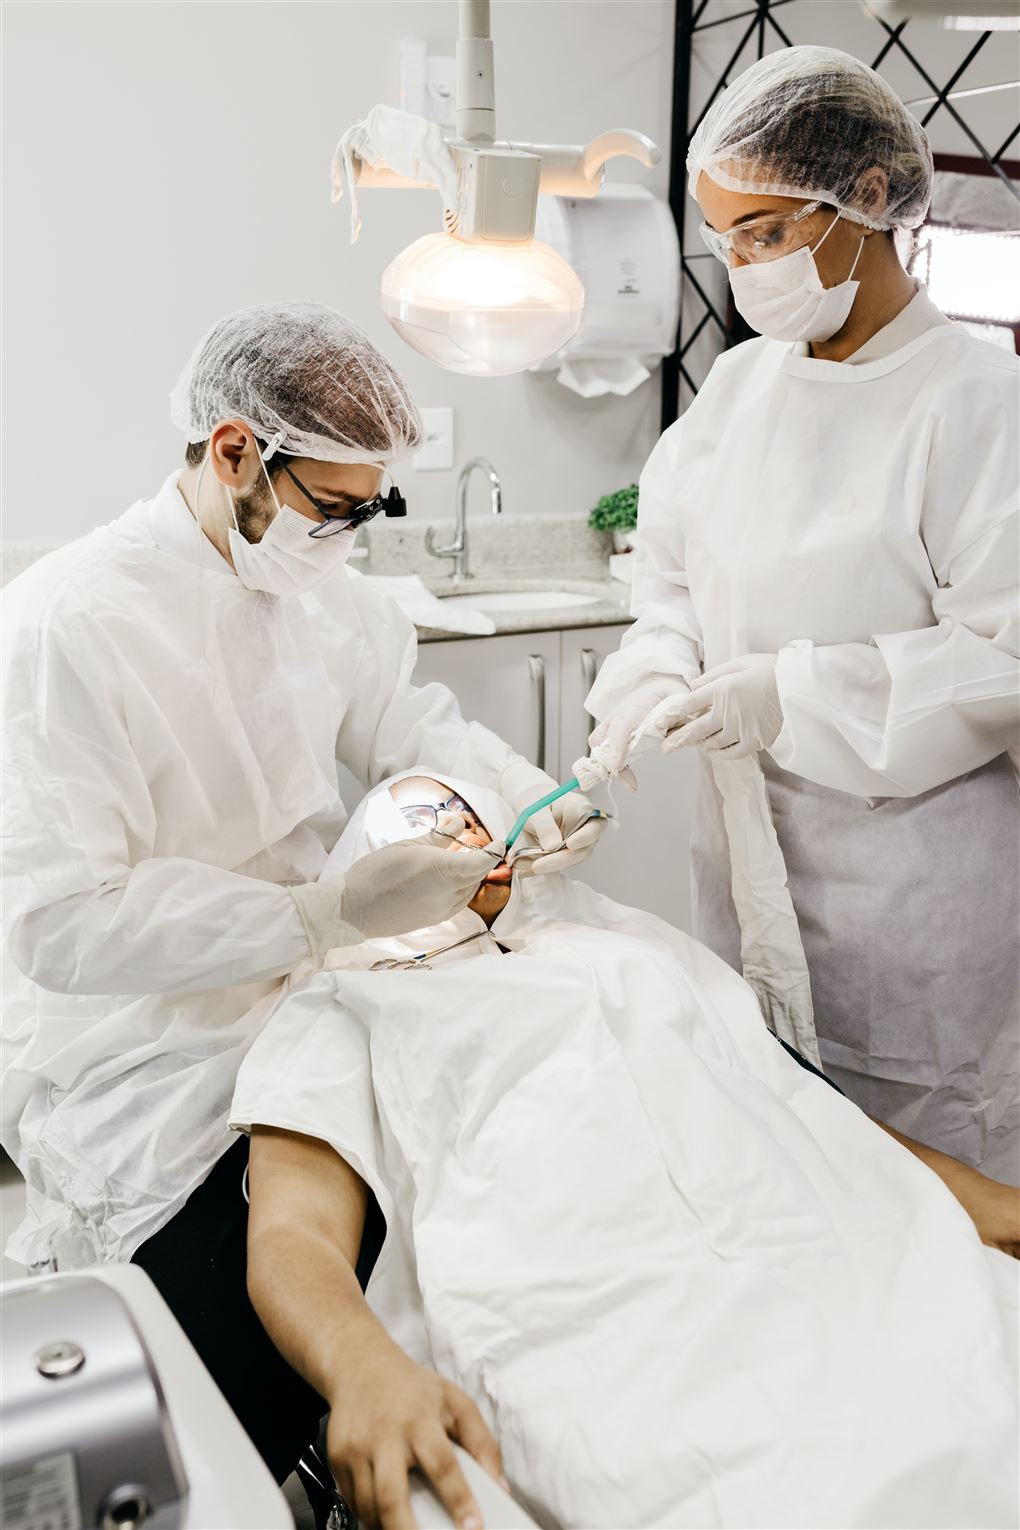 To tandlæger om en patient